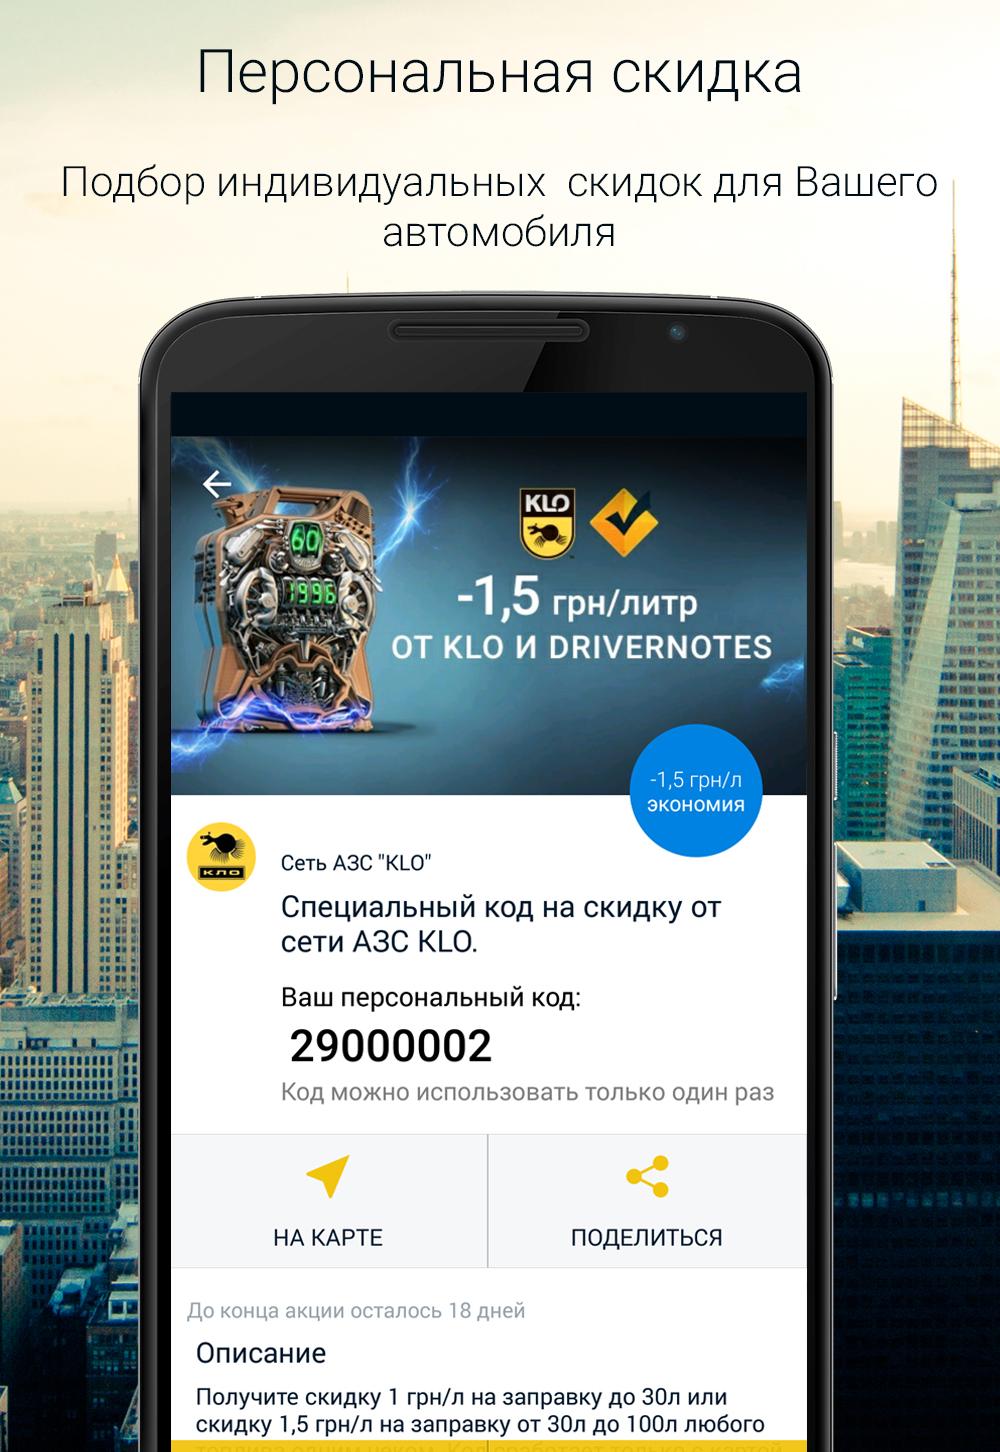 Android application DriverNotes screenshort